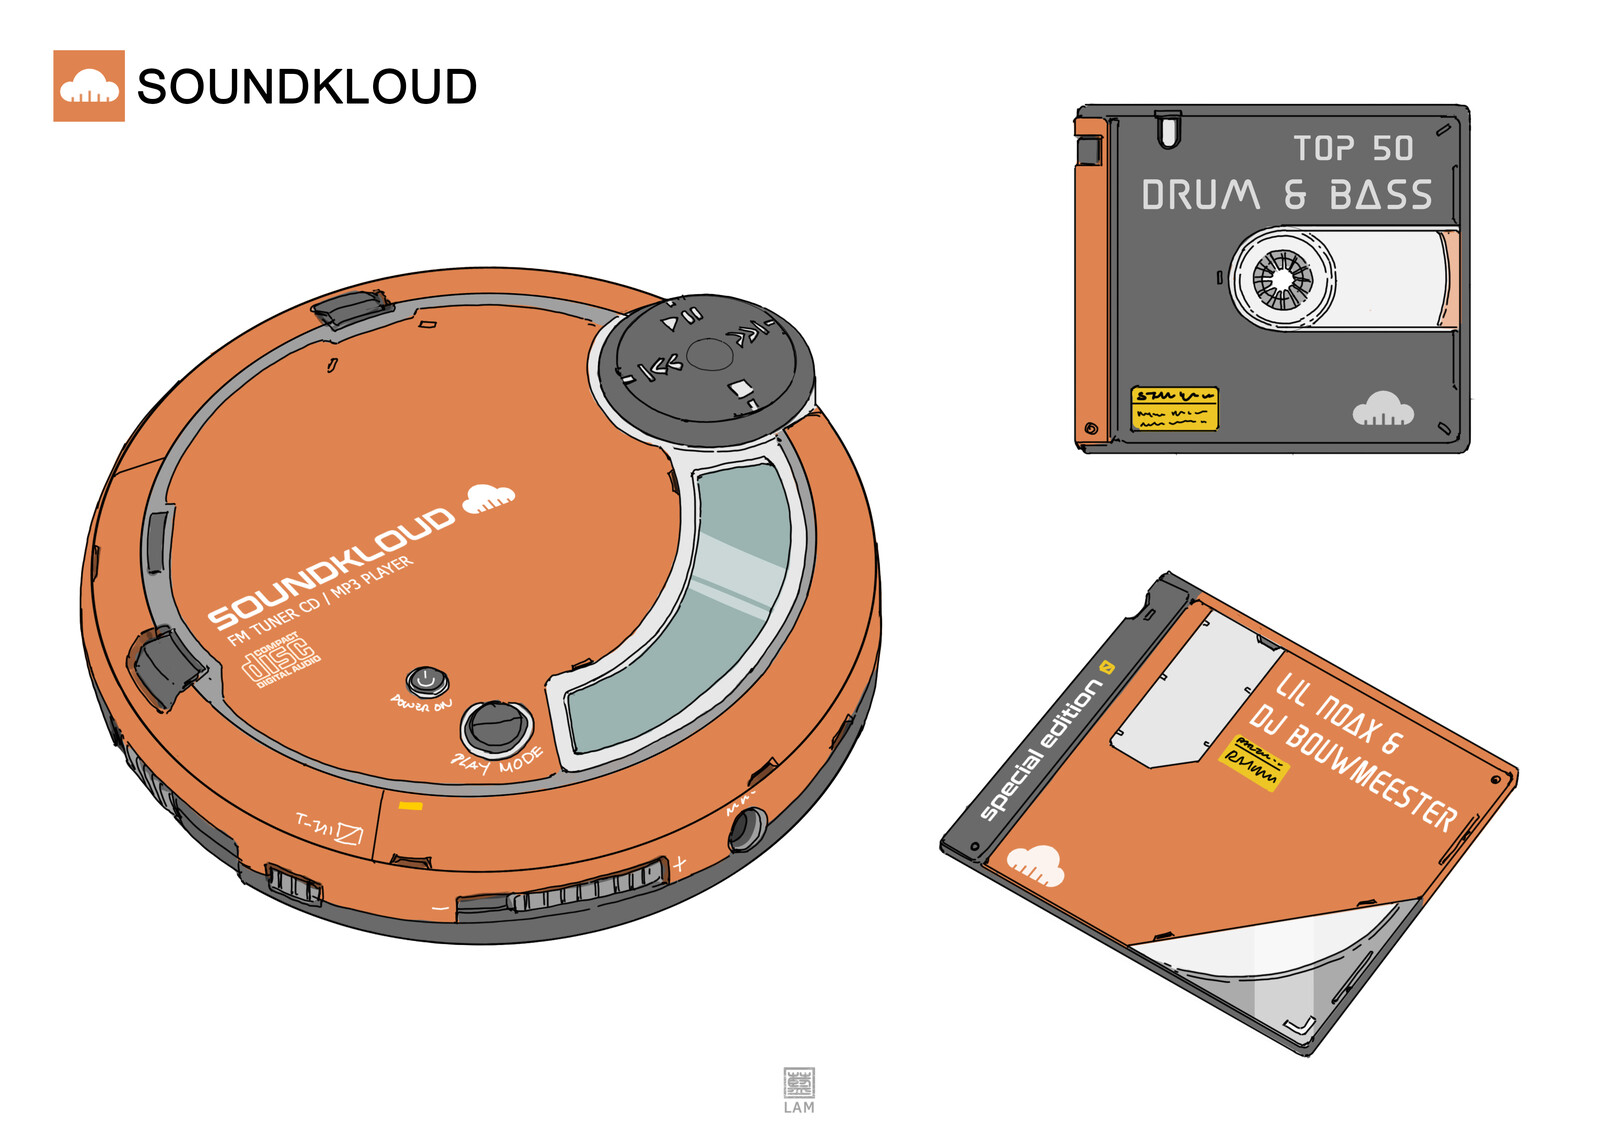 soundcloud / cd player